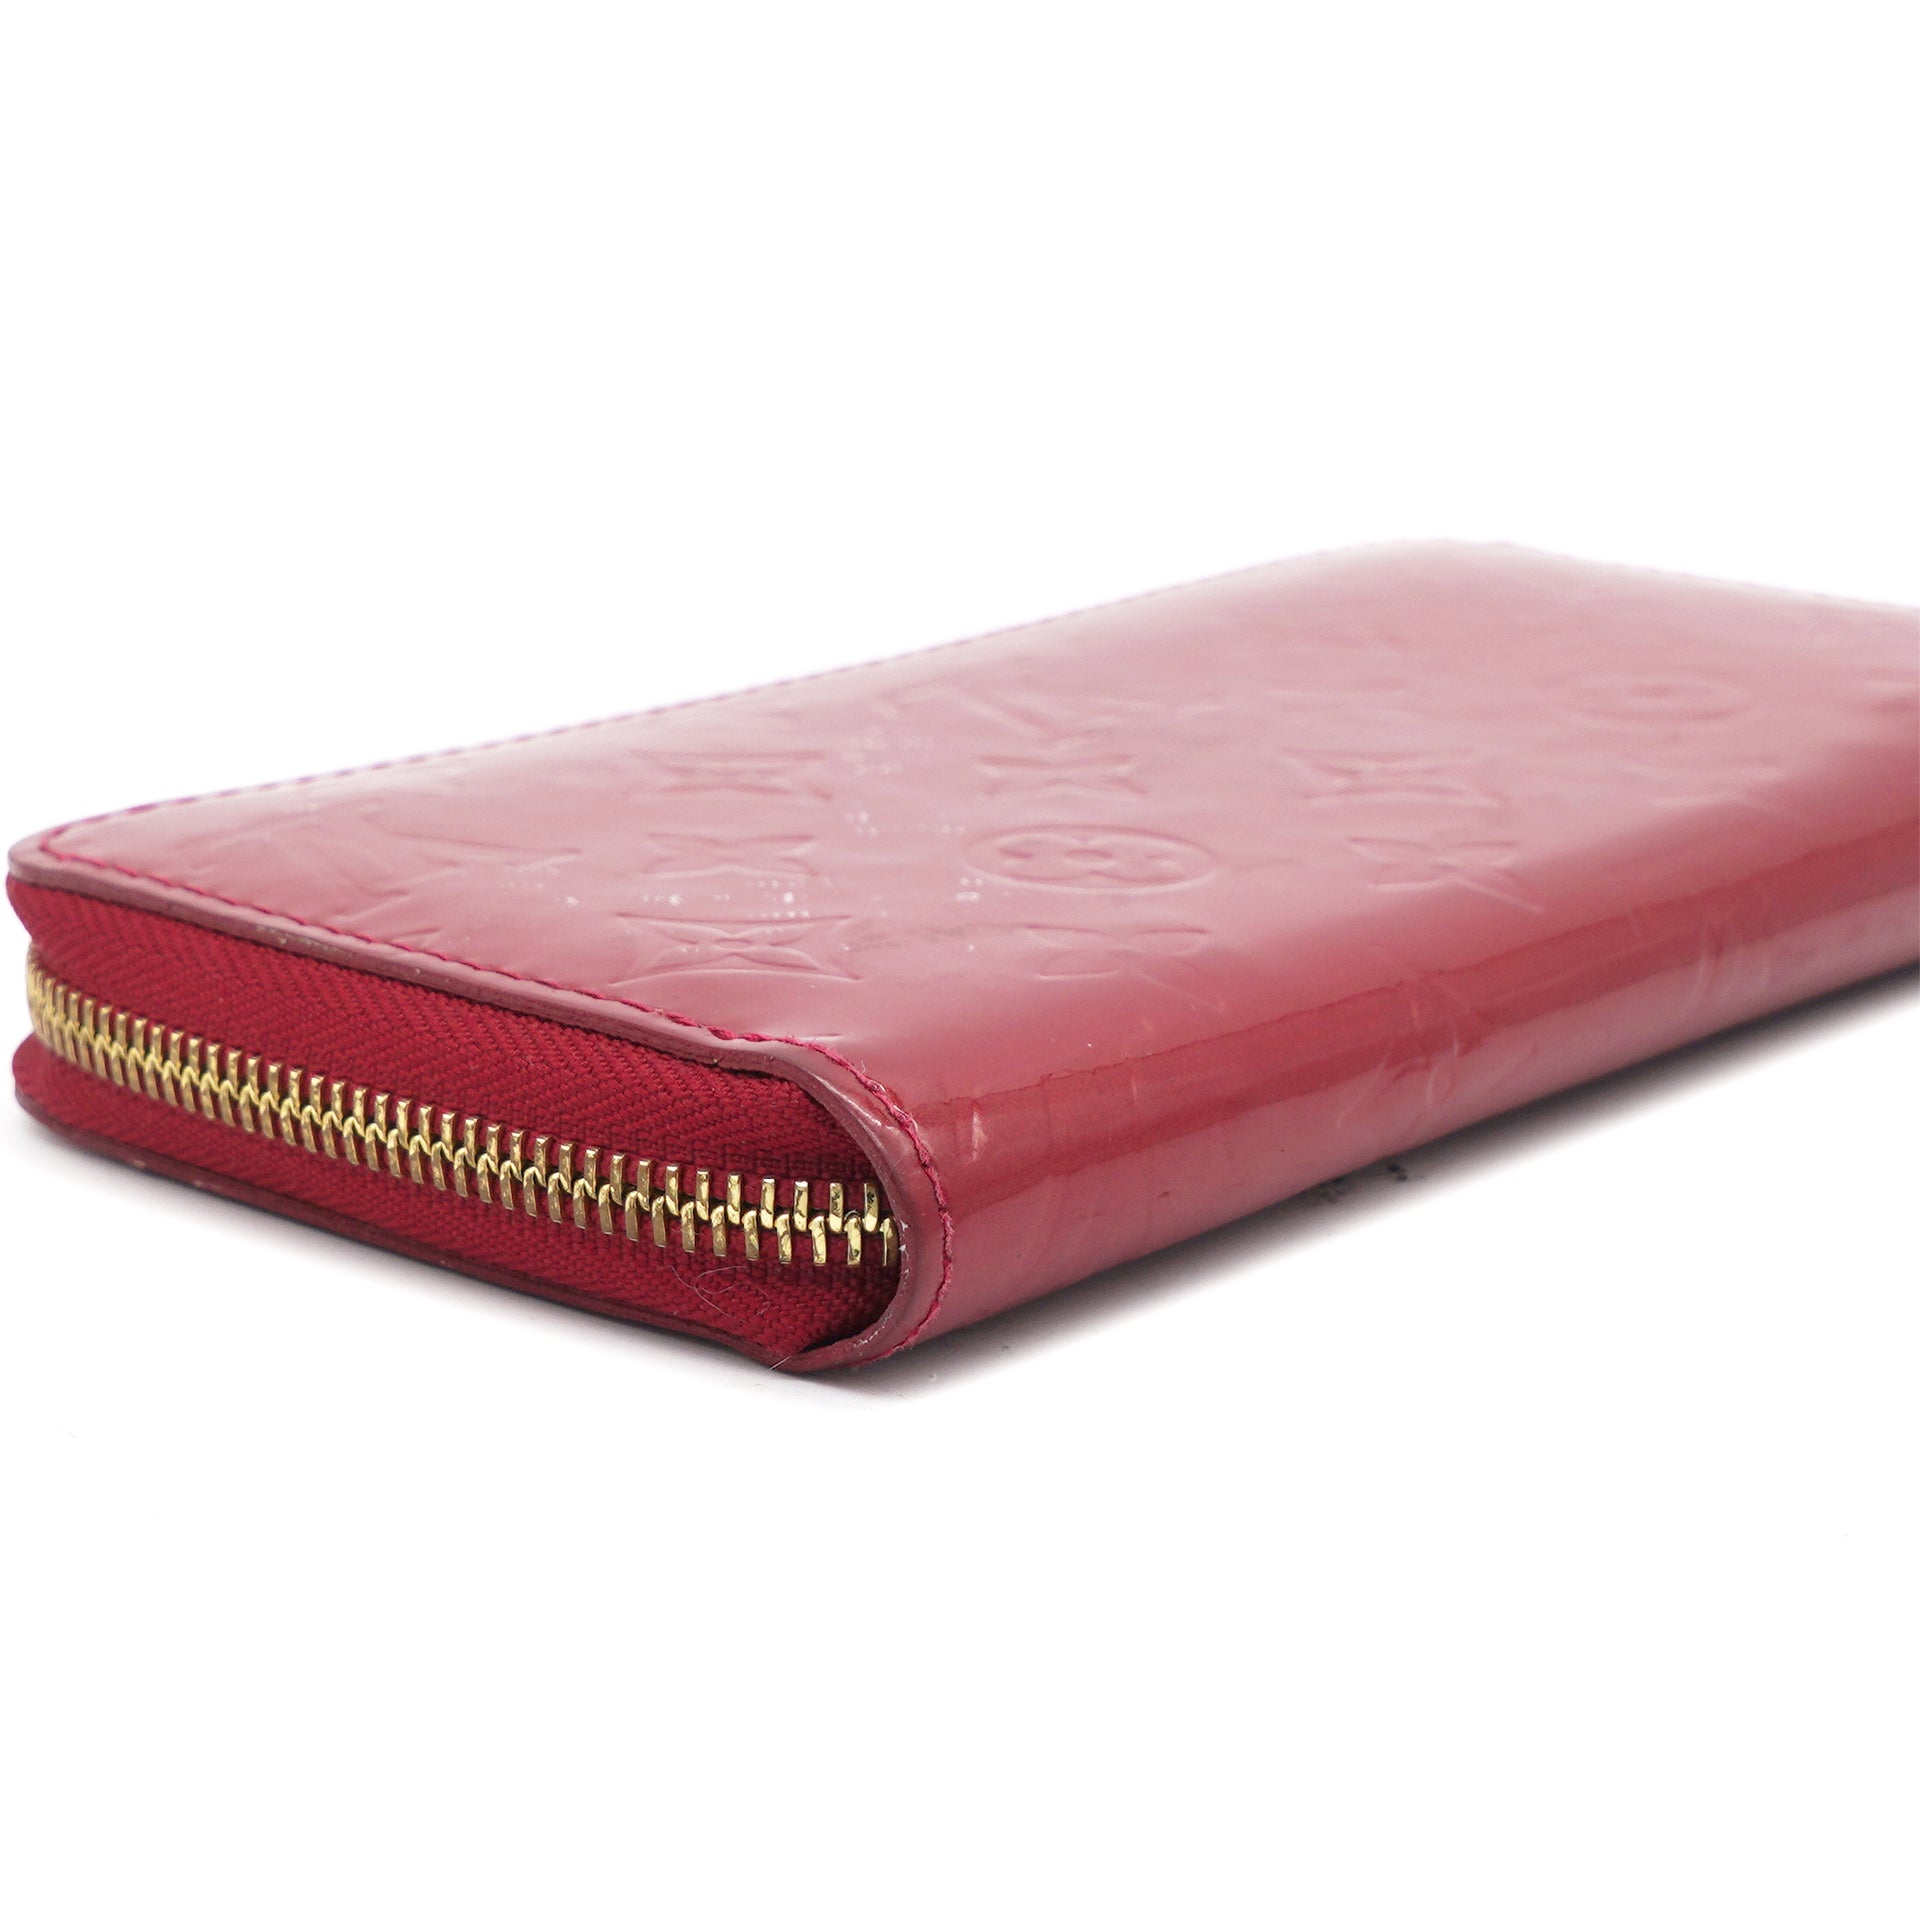 LOUIS VUITTON c.2015 “Clemence” Red Monogram Vernis Patent Leather Zippy  Wallet